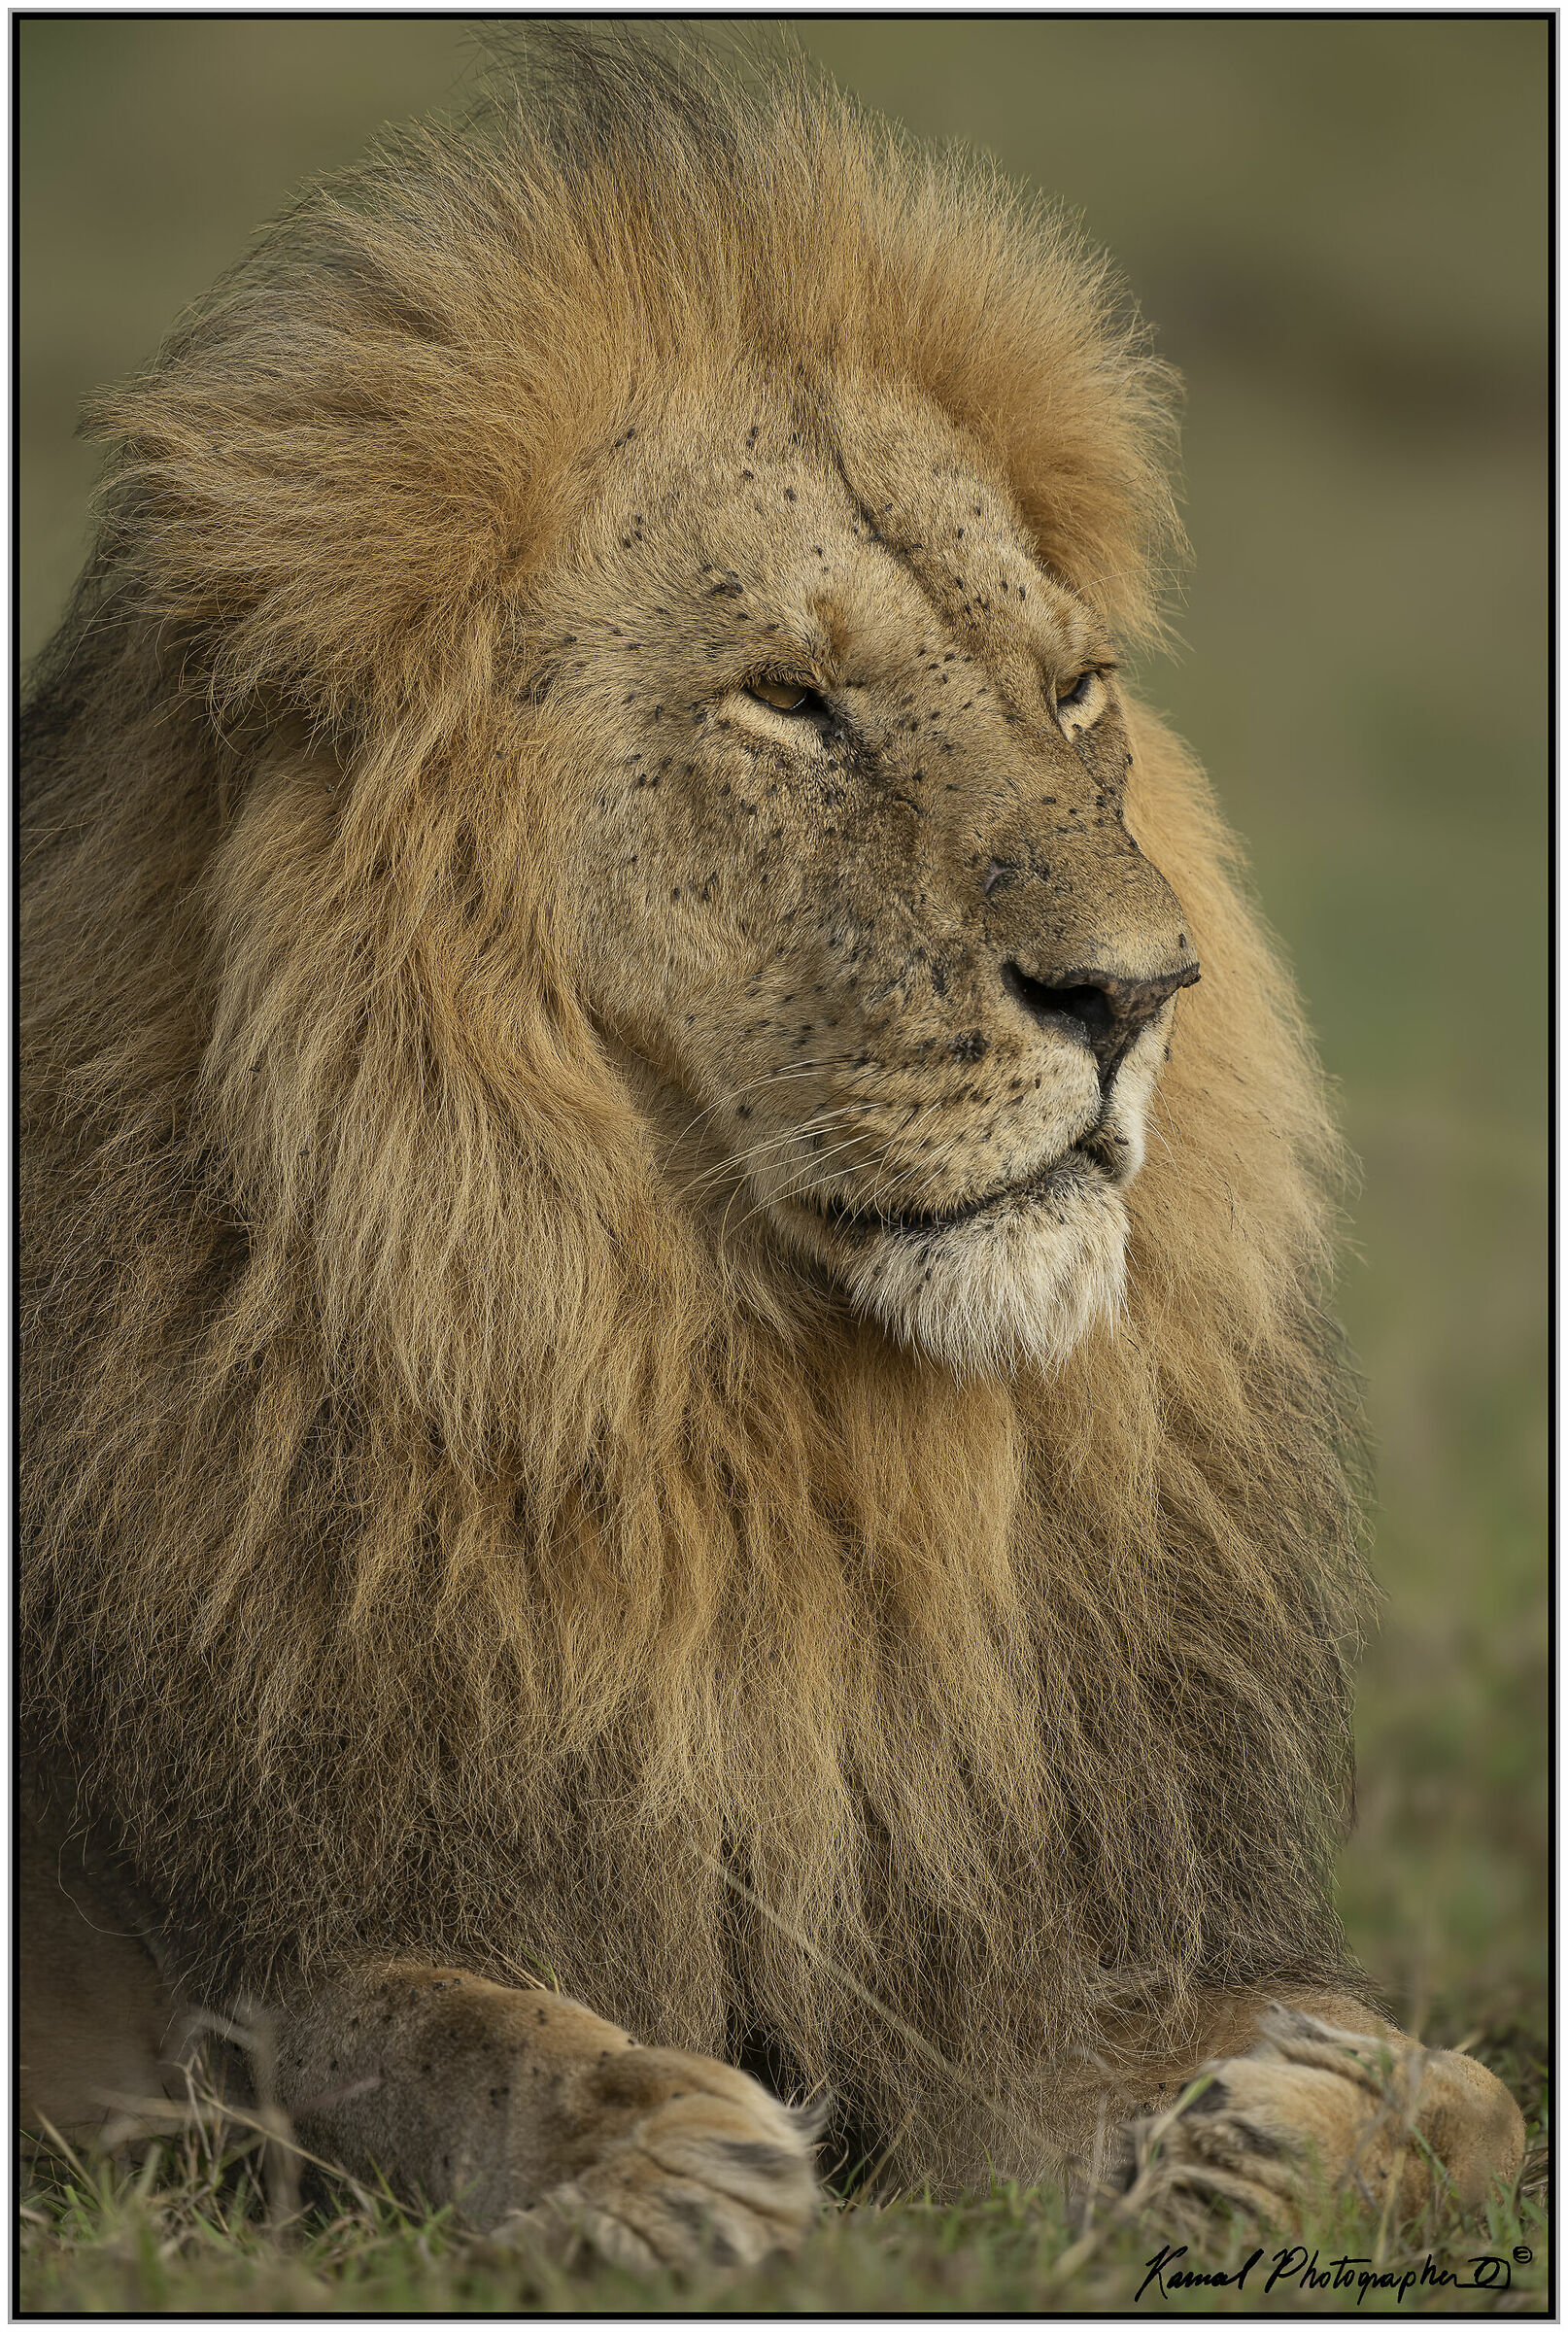  Lion(Panthera leo)...